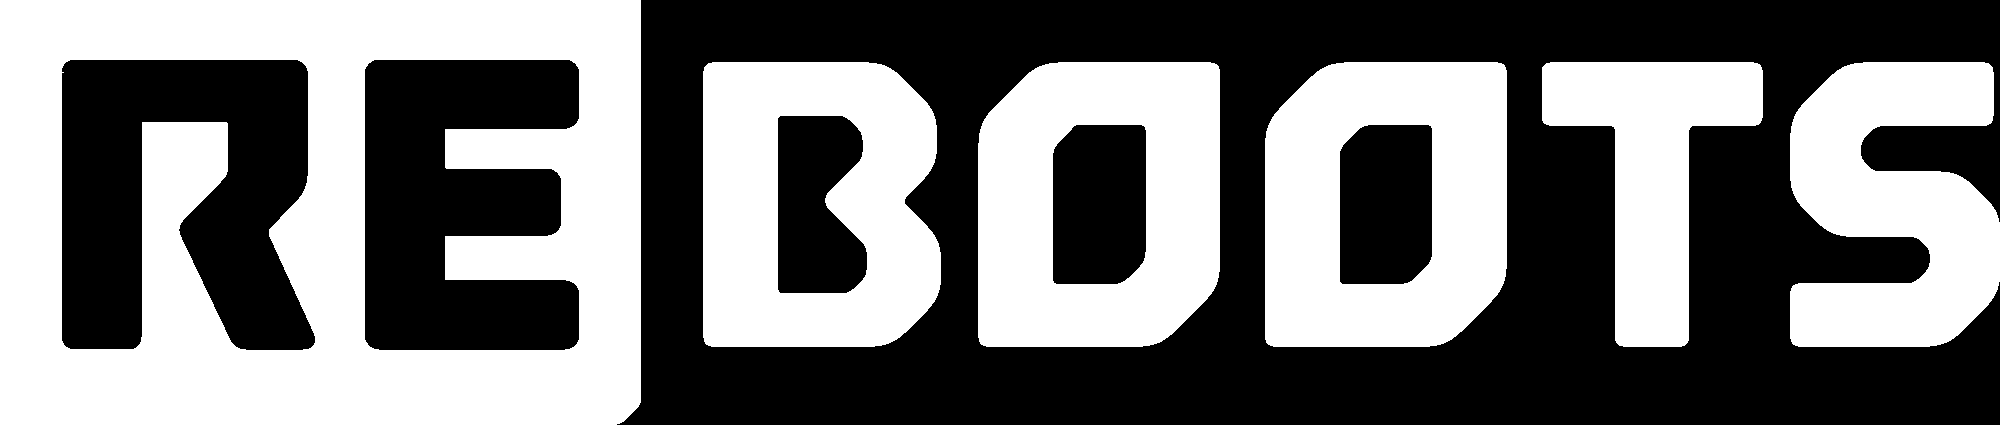 Reboots-logo